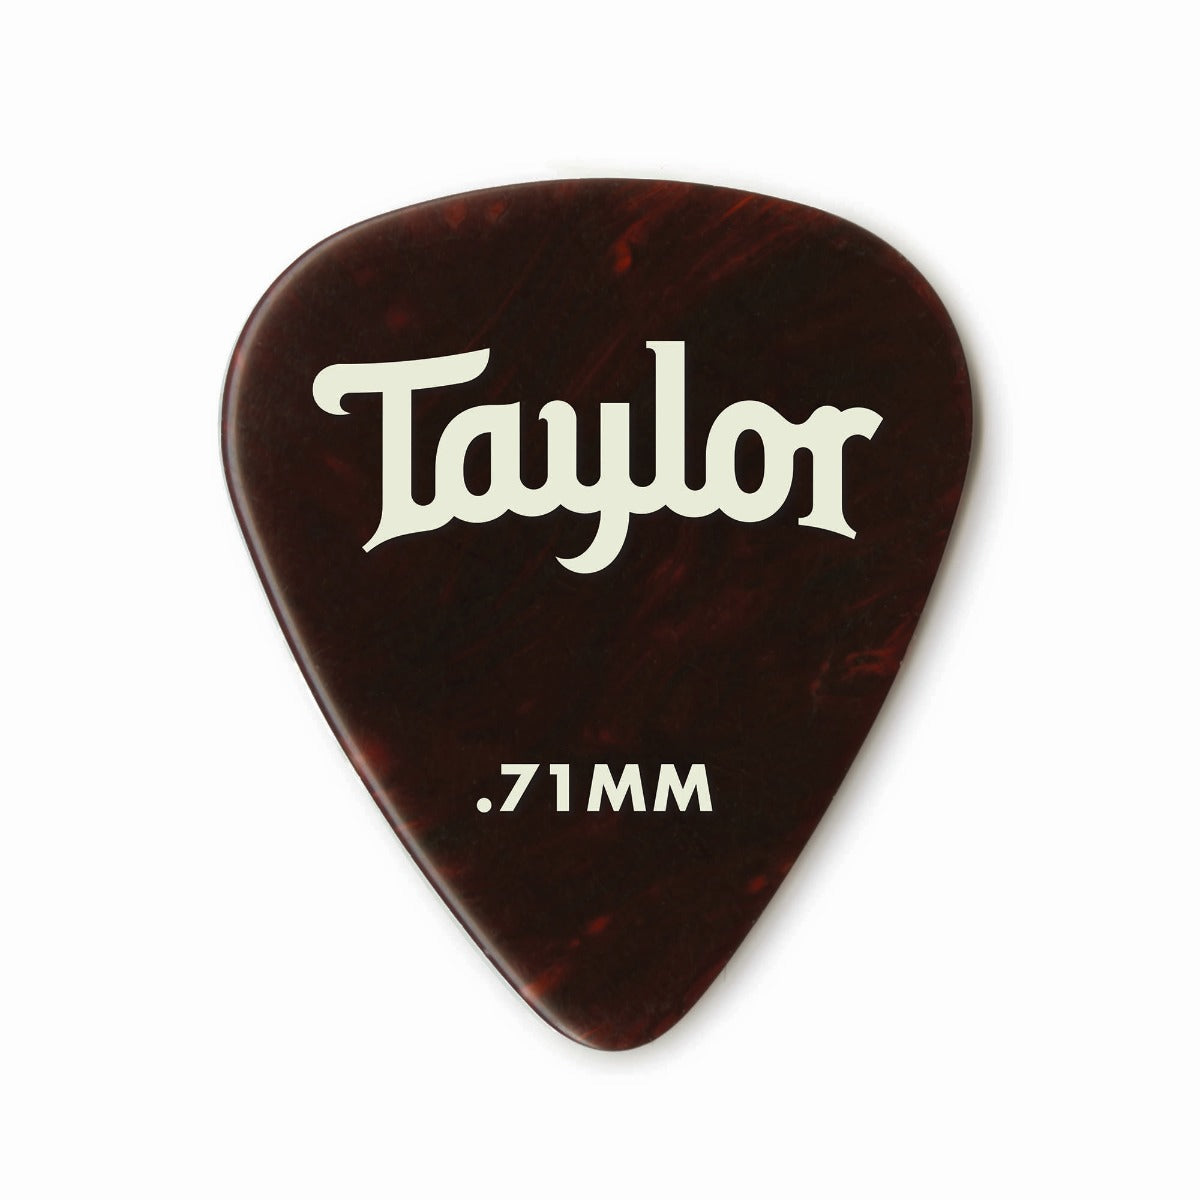 Taylor Celluloid 351 Guitar Picks, Tortoise Shell 0.71mm - 12pk 